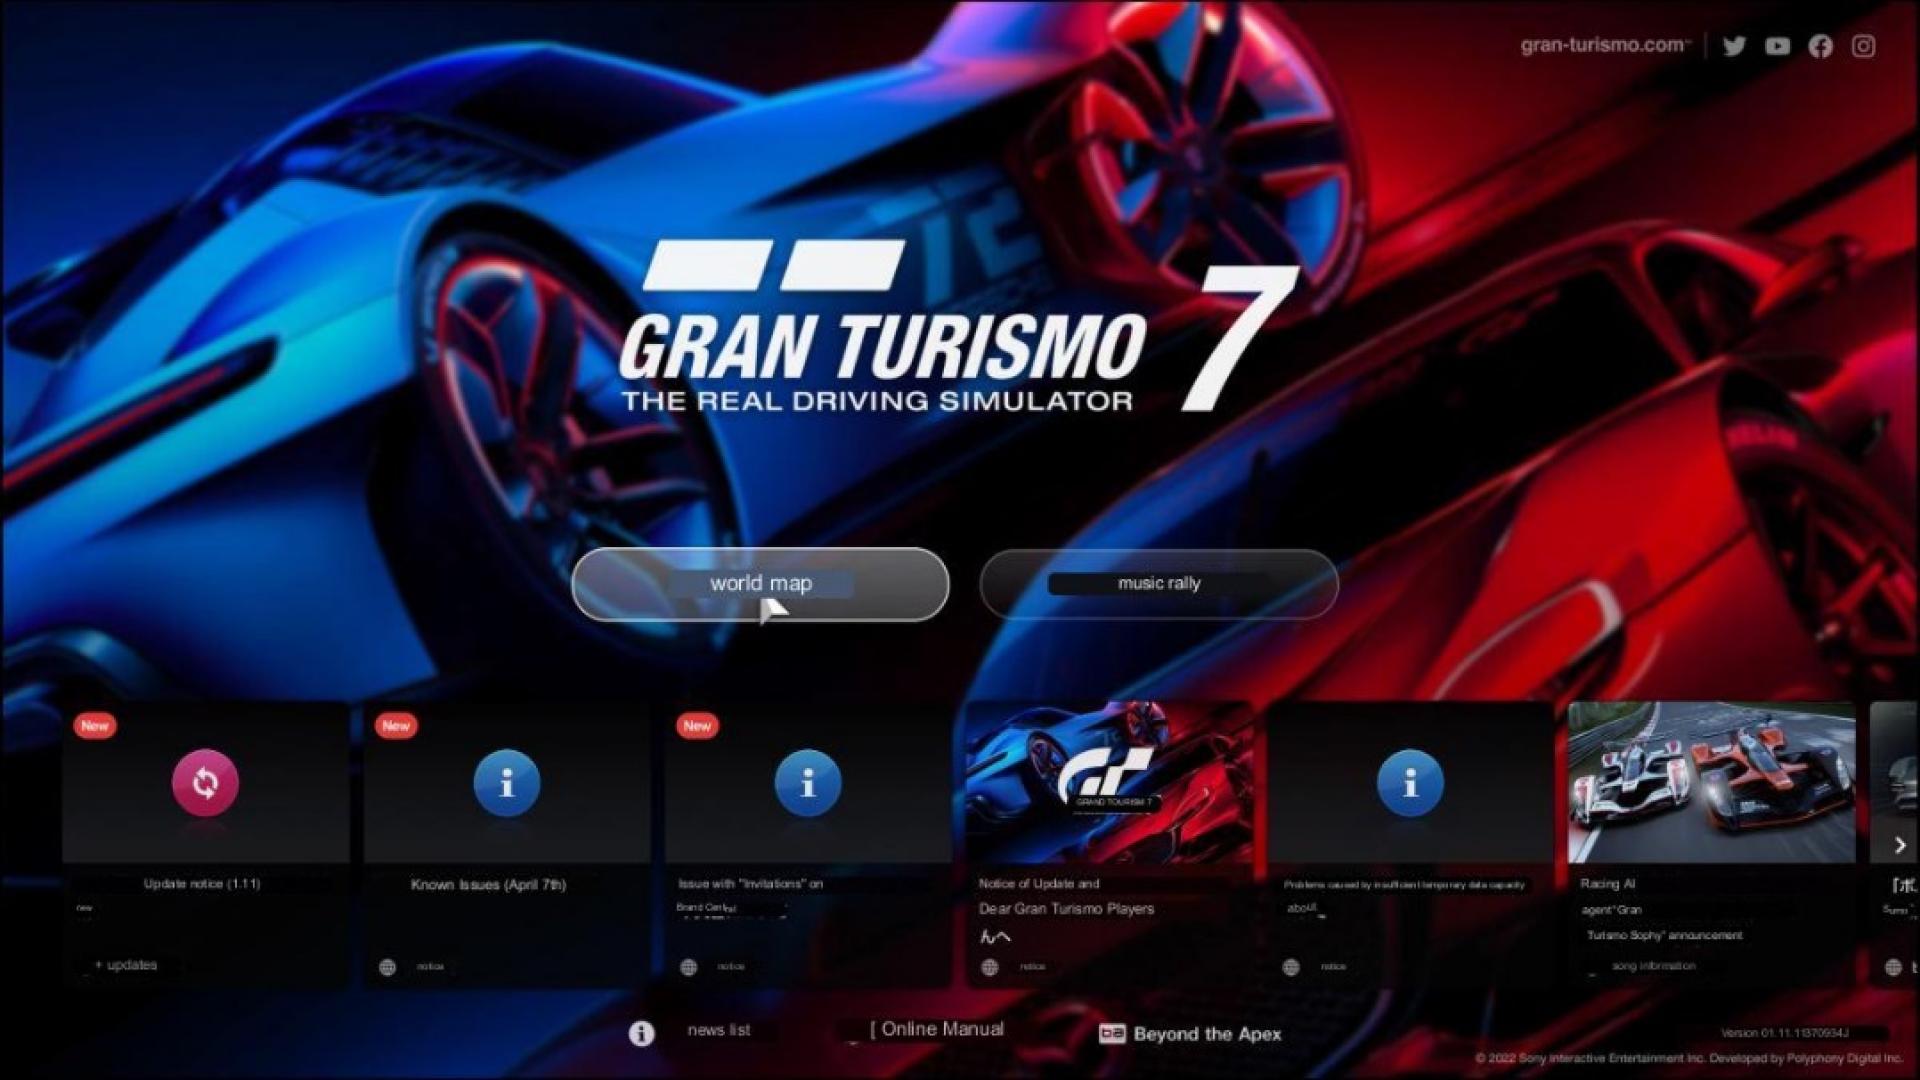 Gran Turismo 7 - April Update